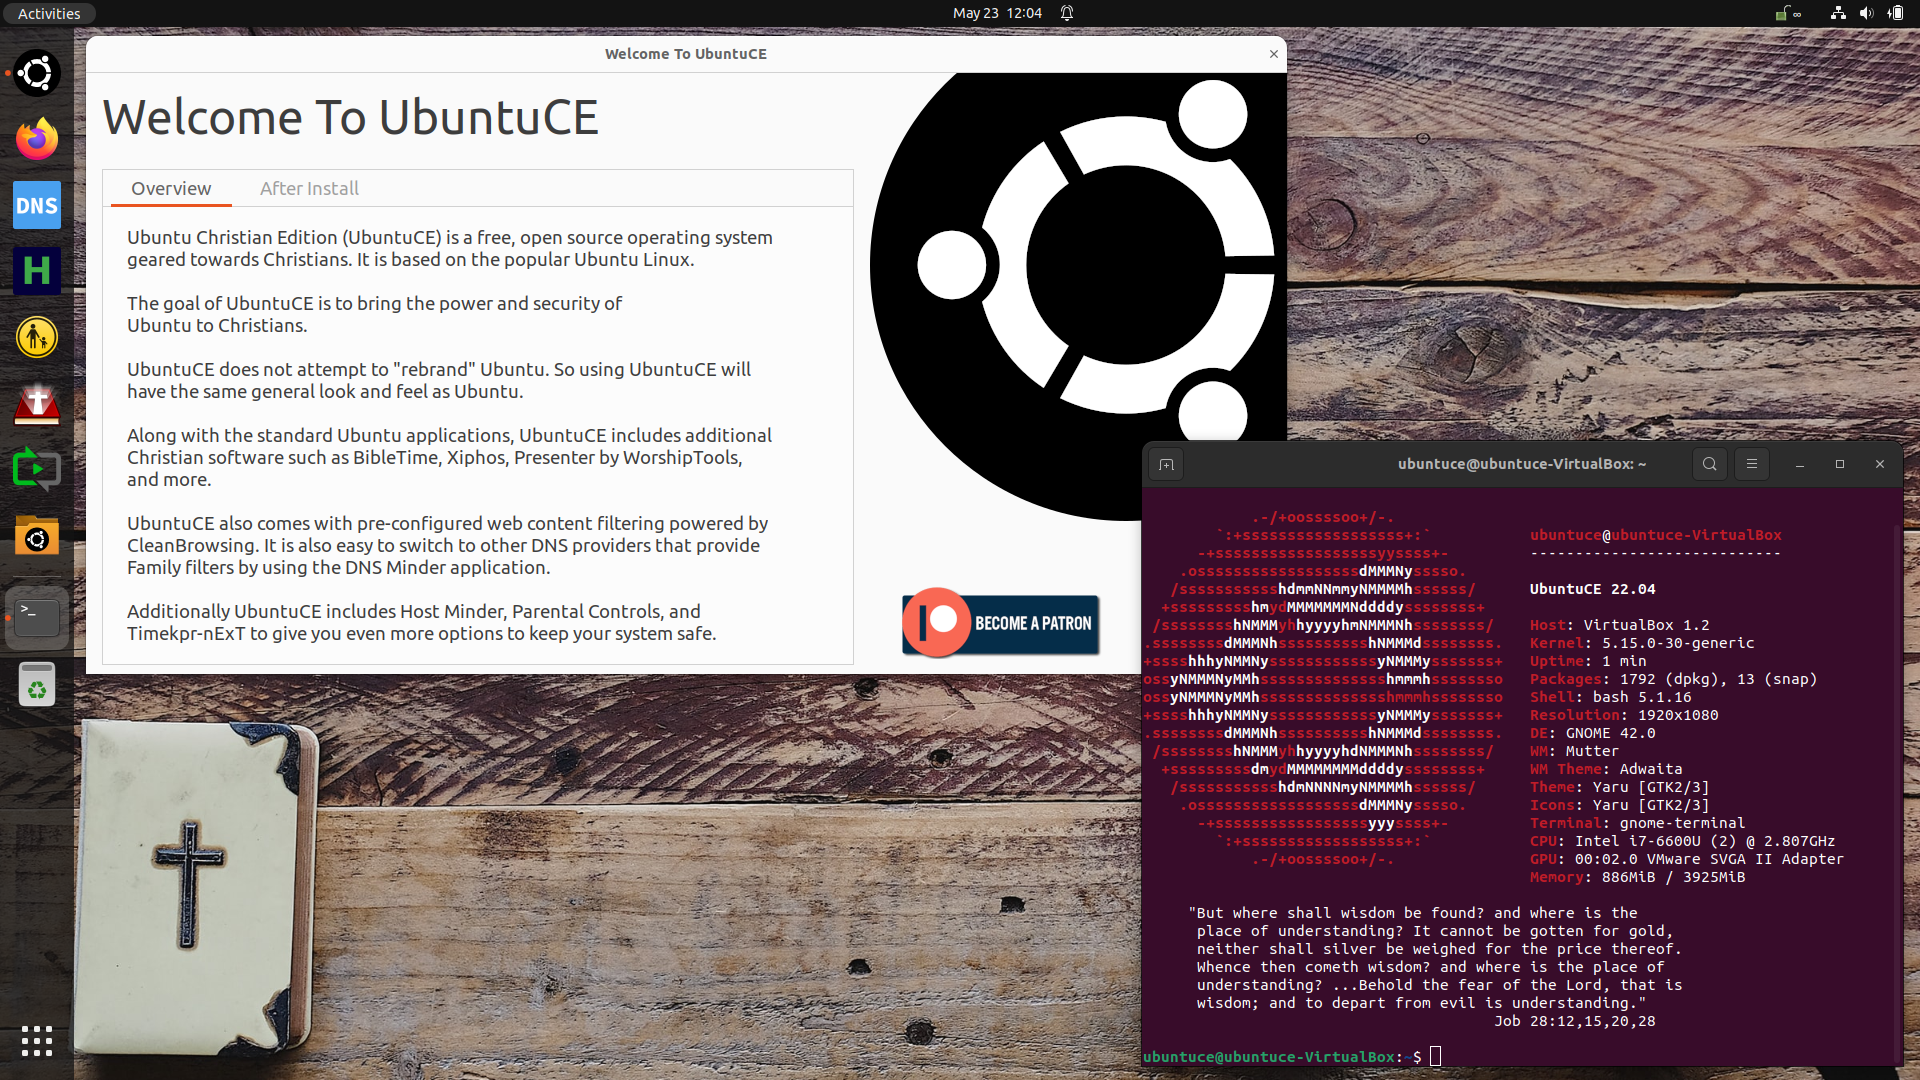 Ubuntu Christian Edition (UbuntuCE) is a free, open source operating system geared towards Christians. It is based on Ubuntu 22.04 LTS. UbuntuCE is pr